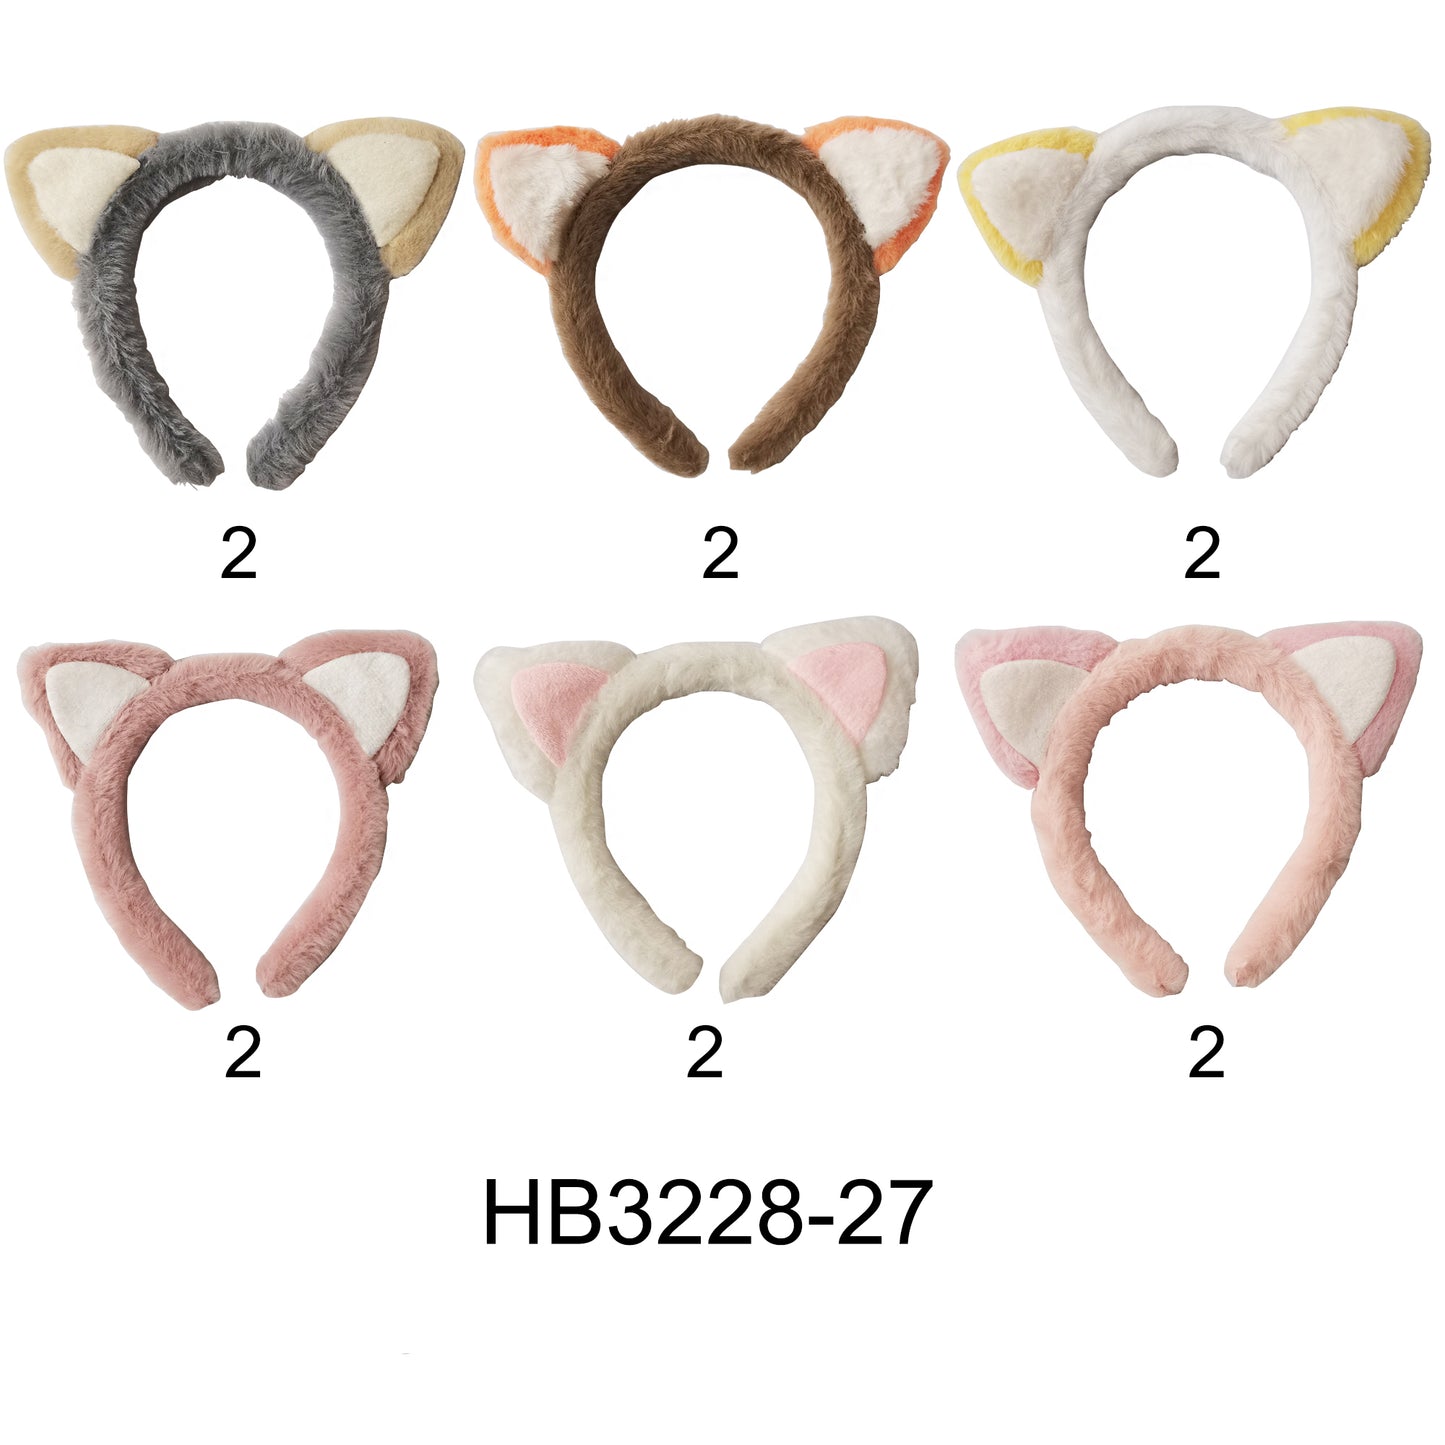 CAT EAR TERRY HEADBAND HB3228-27 (12PC)